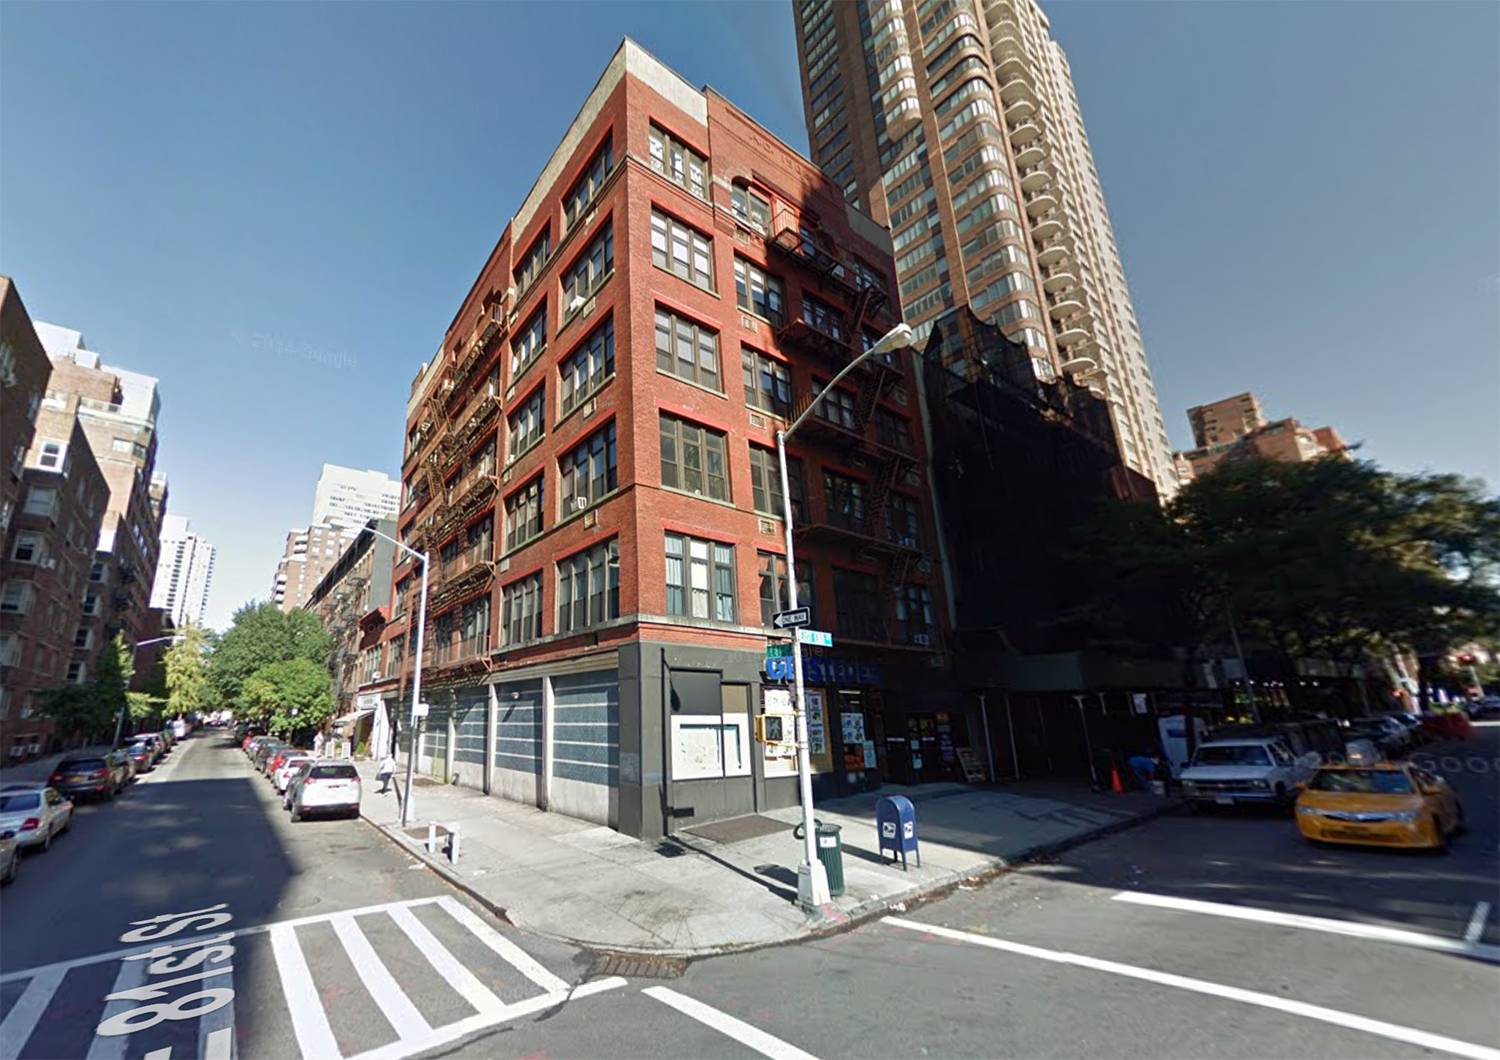 40 East End Avenue. Via Google Maps.